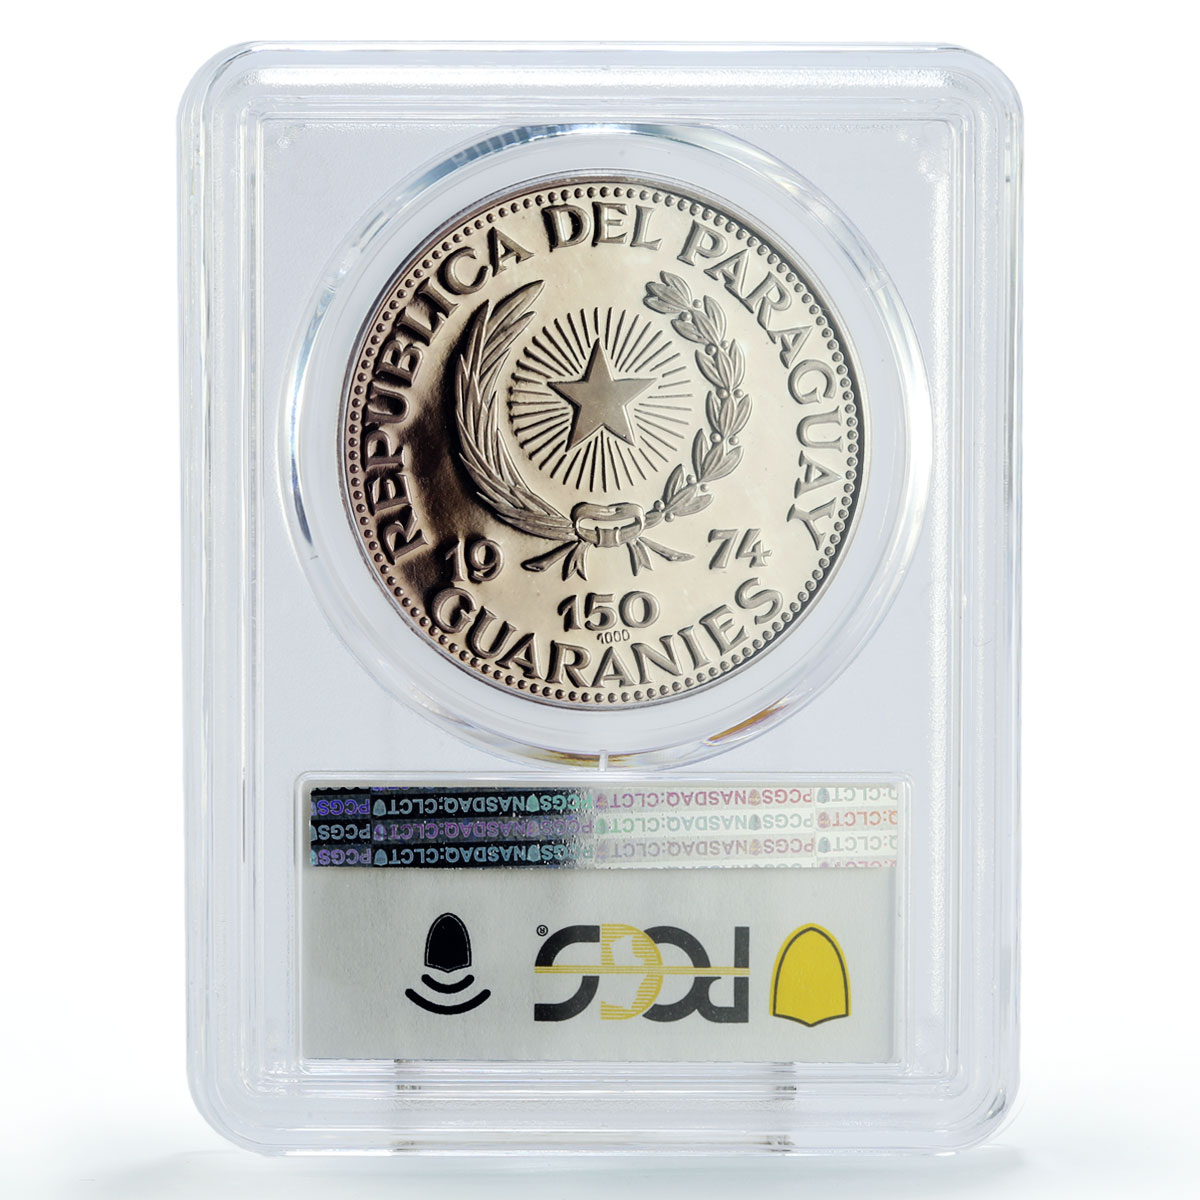 Paraguay 150 guaranies Politician Abraham Lincoln PR68 PCGS silver coin 1974